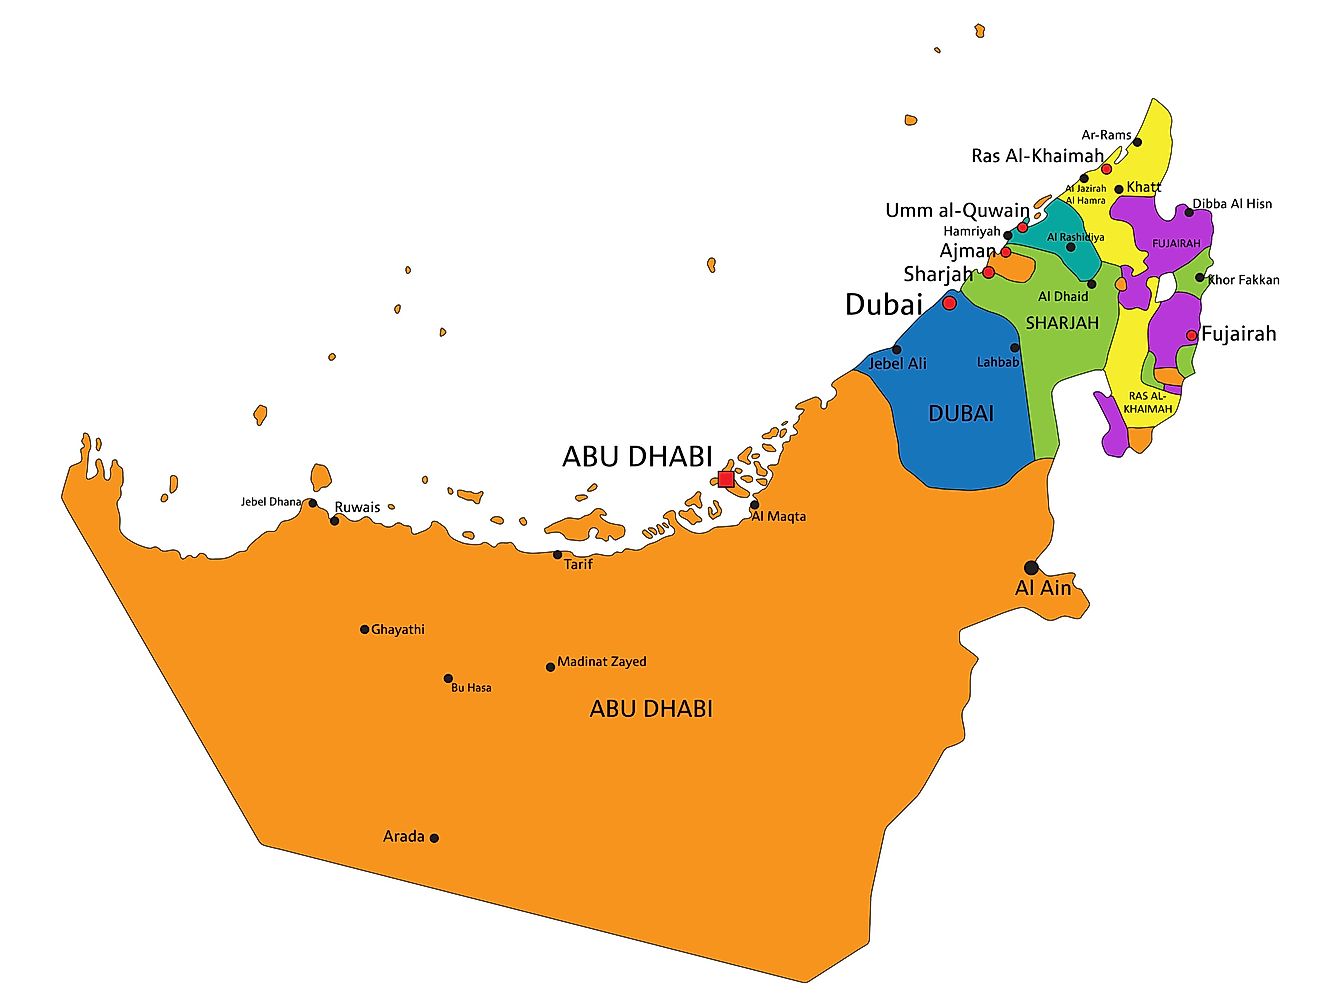 The United Arab Emirates Maps & Facts - World Atlas